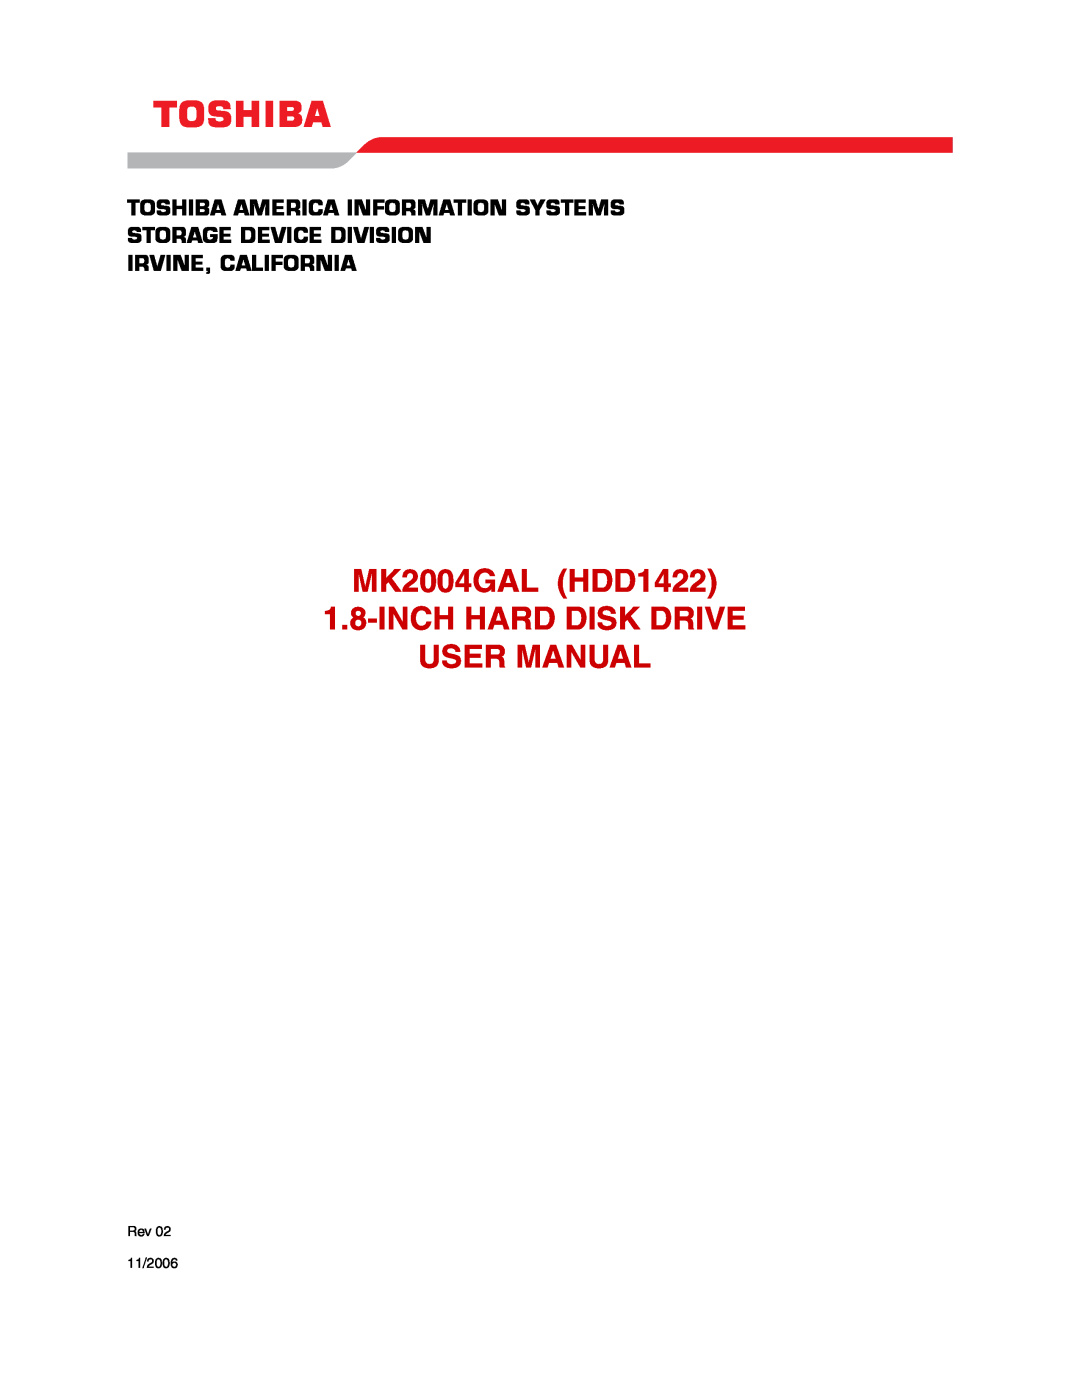 Toshiba MK2004GAL user manual Toshiba America Information Systems Storage Device Division, Irvine, California, Rev 11/2006 